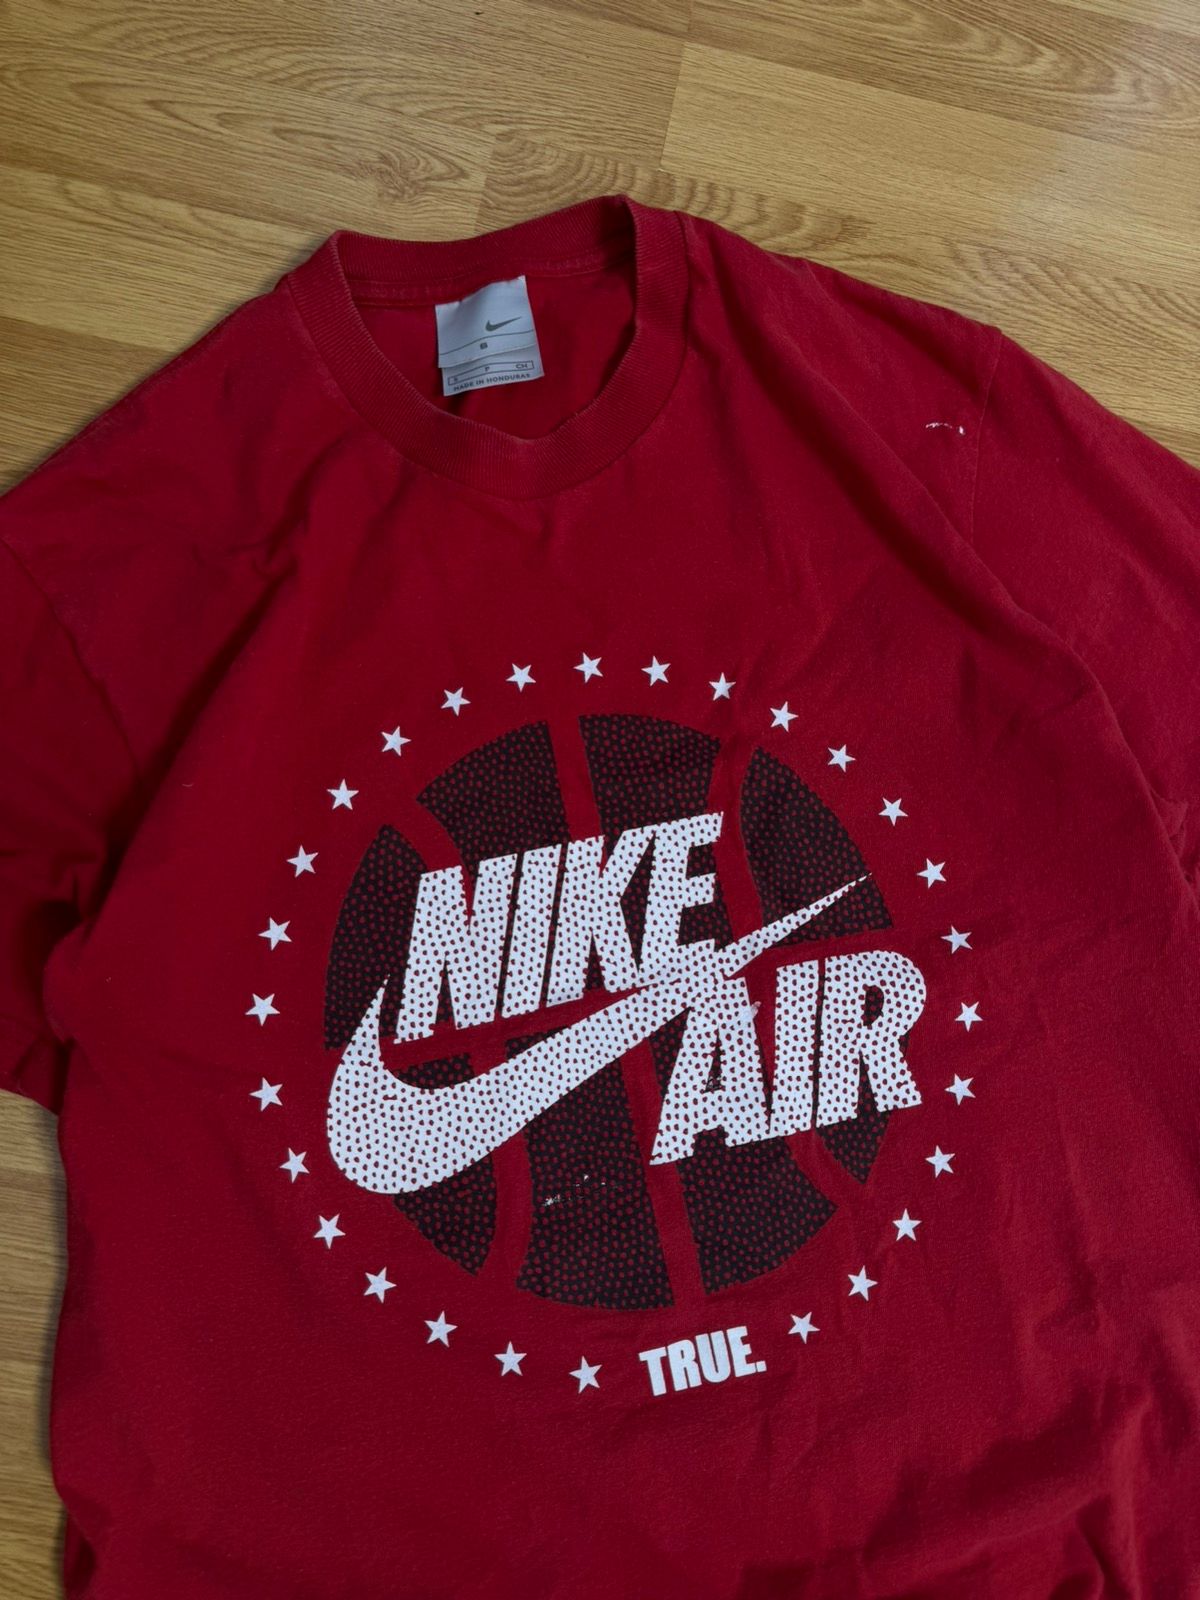 Nike Vintage 90s Nike Streetwear Air True. Red Tee Size US M / EU 48-50 / 2 - 6 Thumbnail